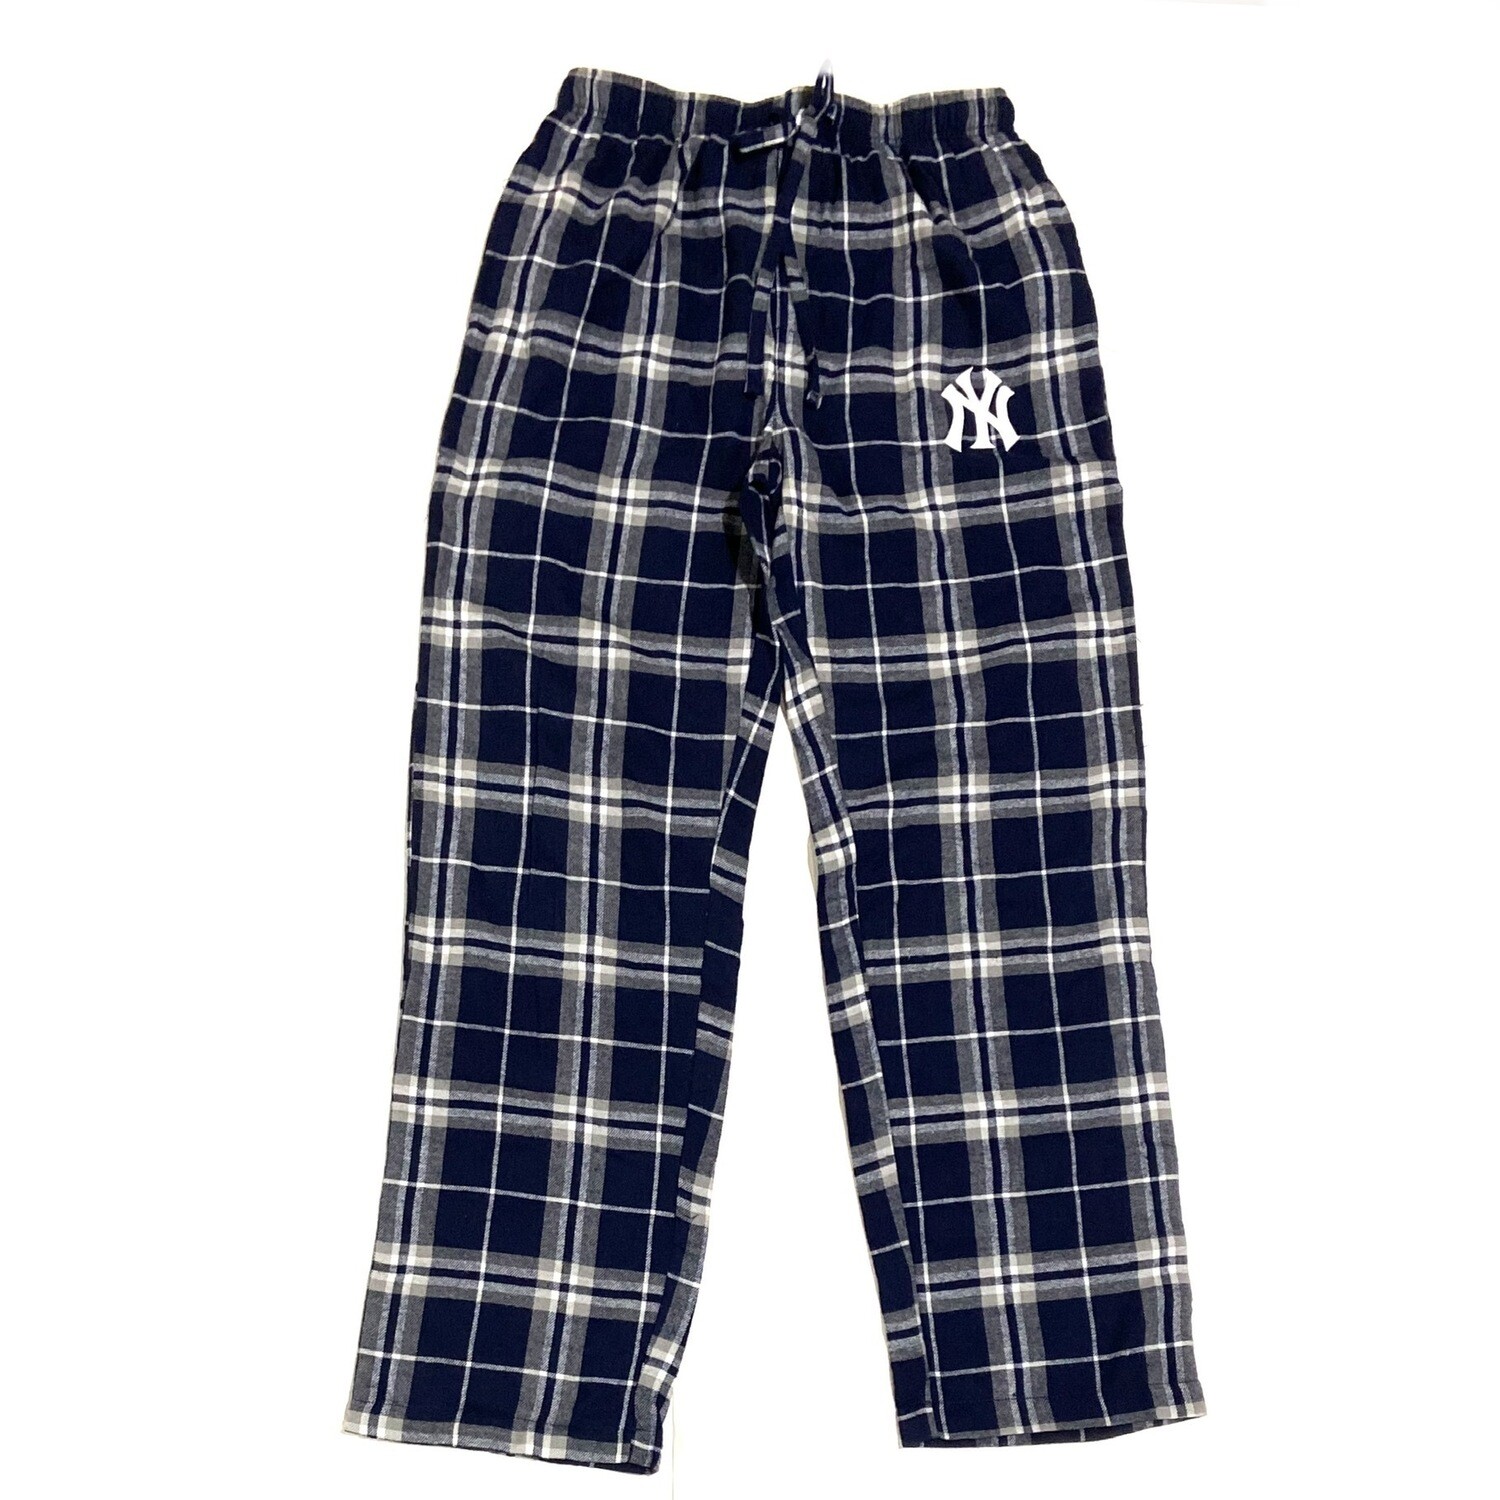 Concepts Sport Pajama Pants Yankees